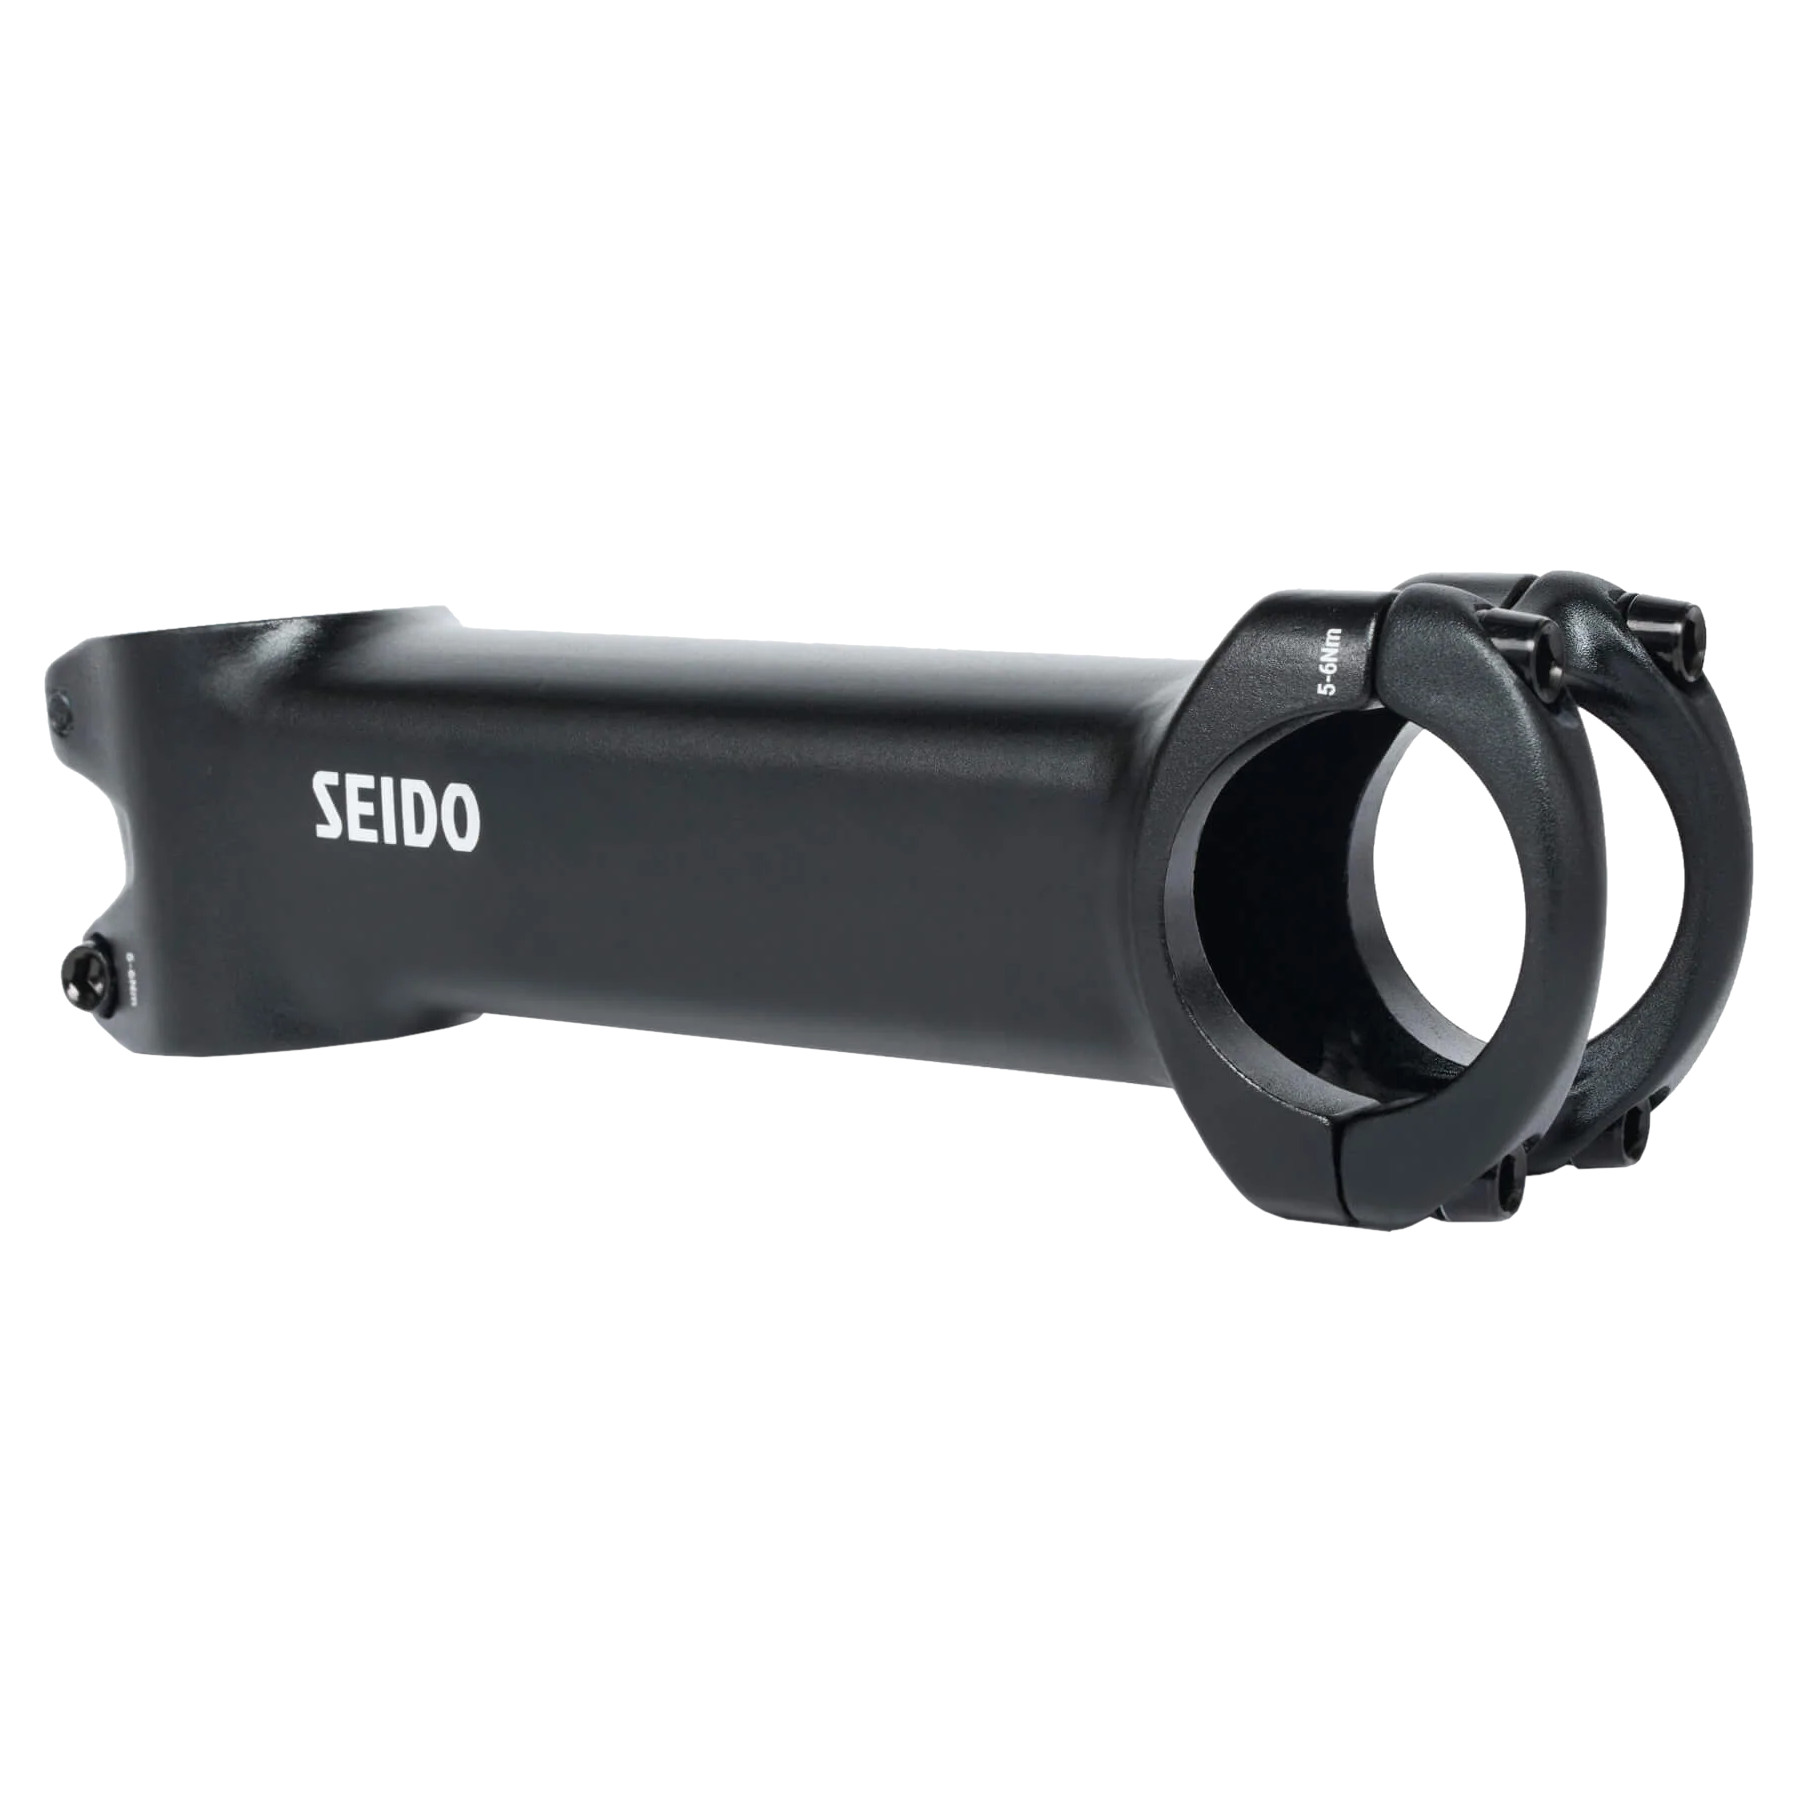 Productfoto van SEIDO MEANDER Handlebar Stem | Road - 31.8mm - sandblasted black anodized